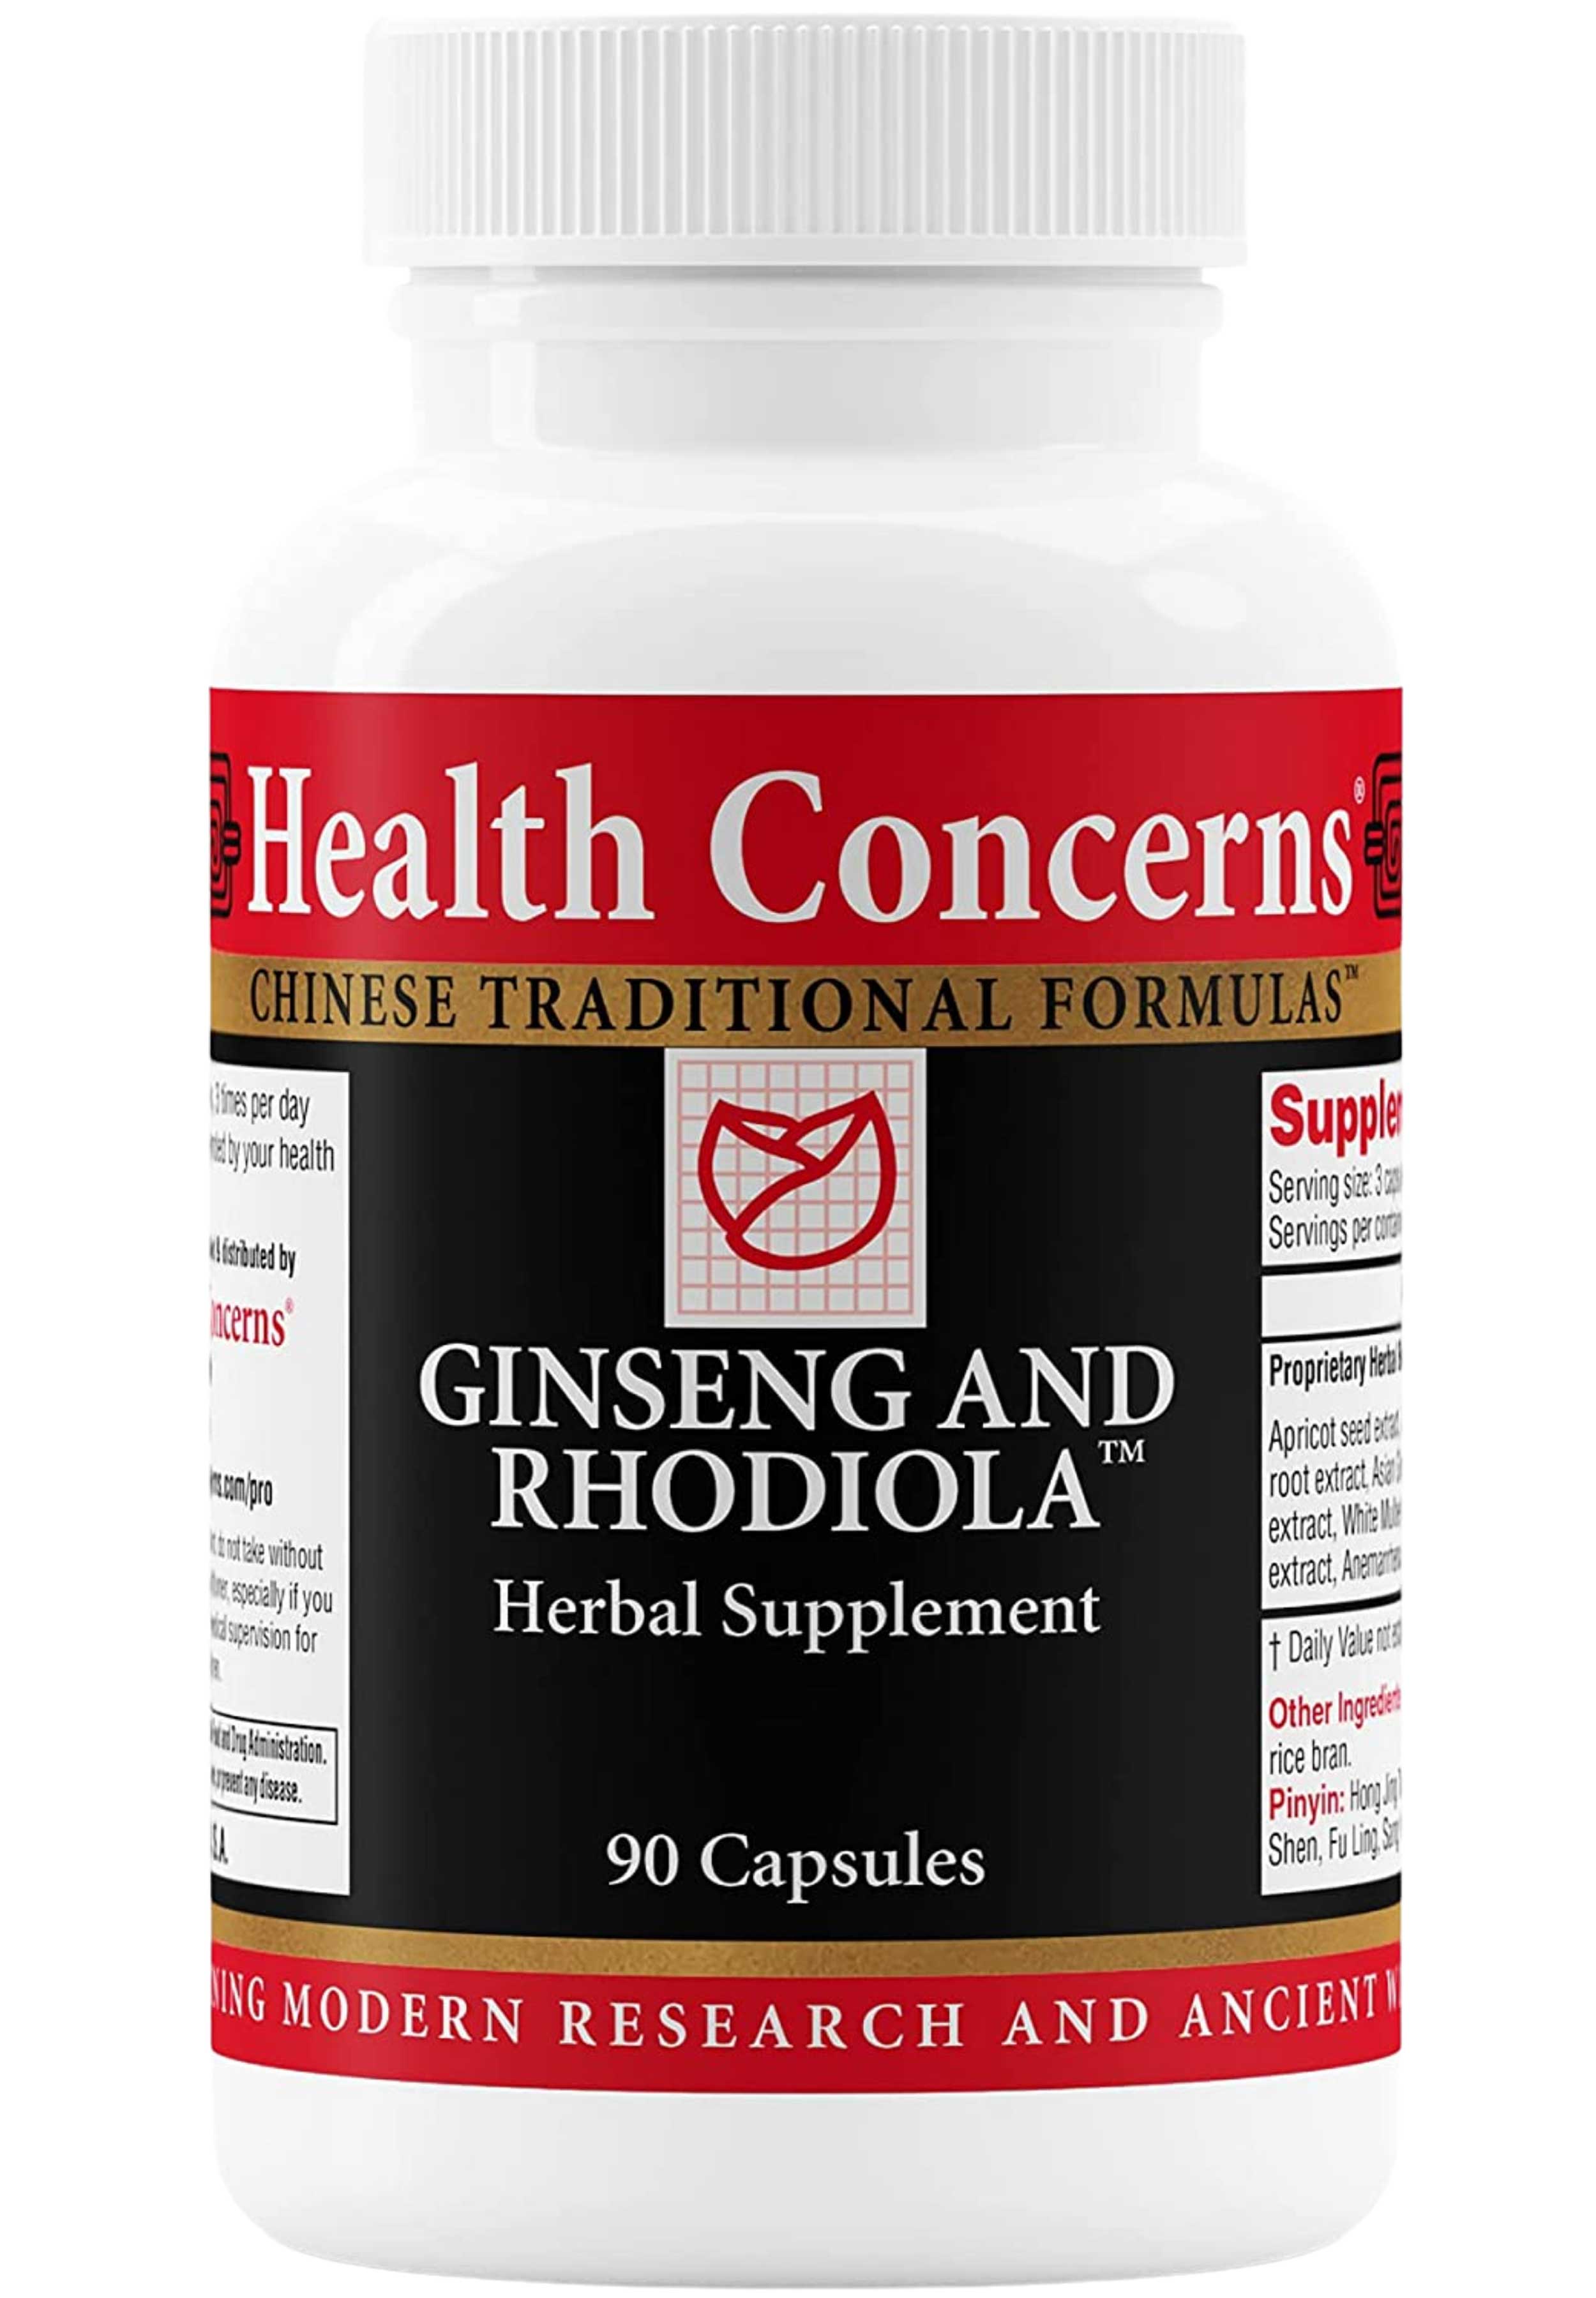 Health Concerns Ginseng and Rhodiola